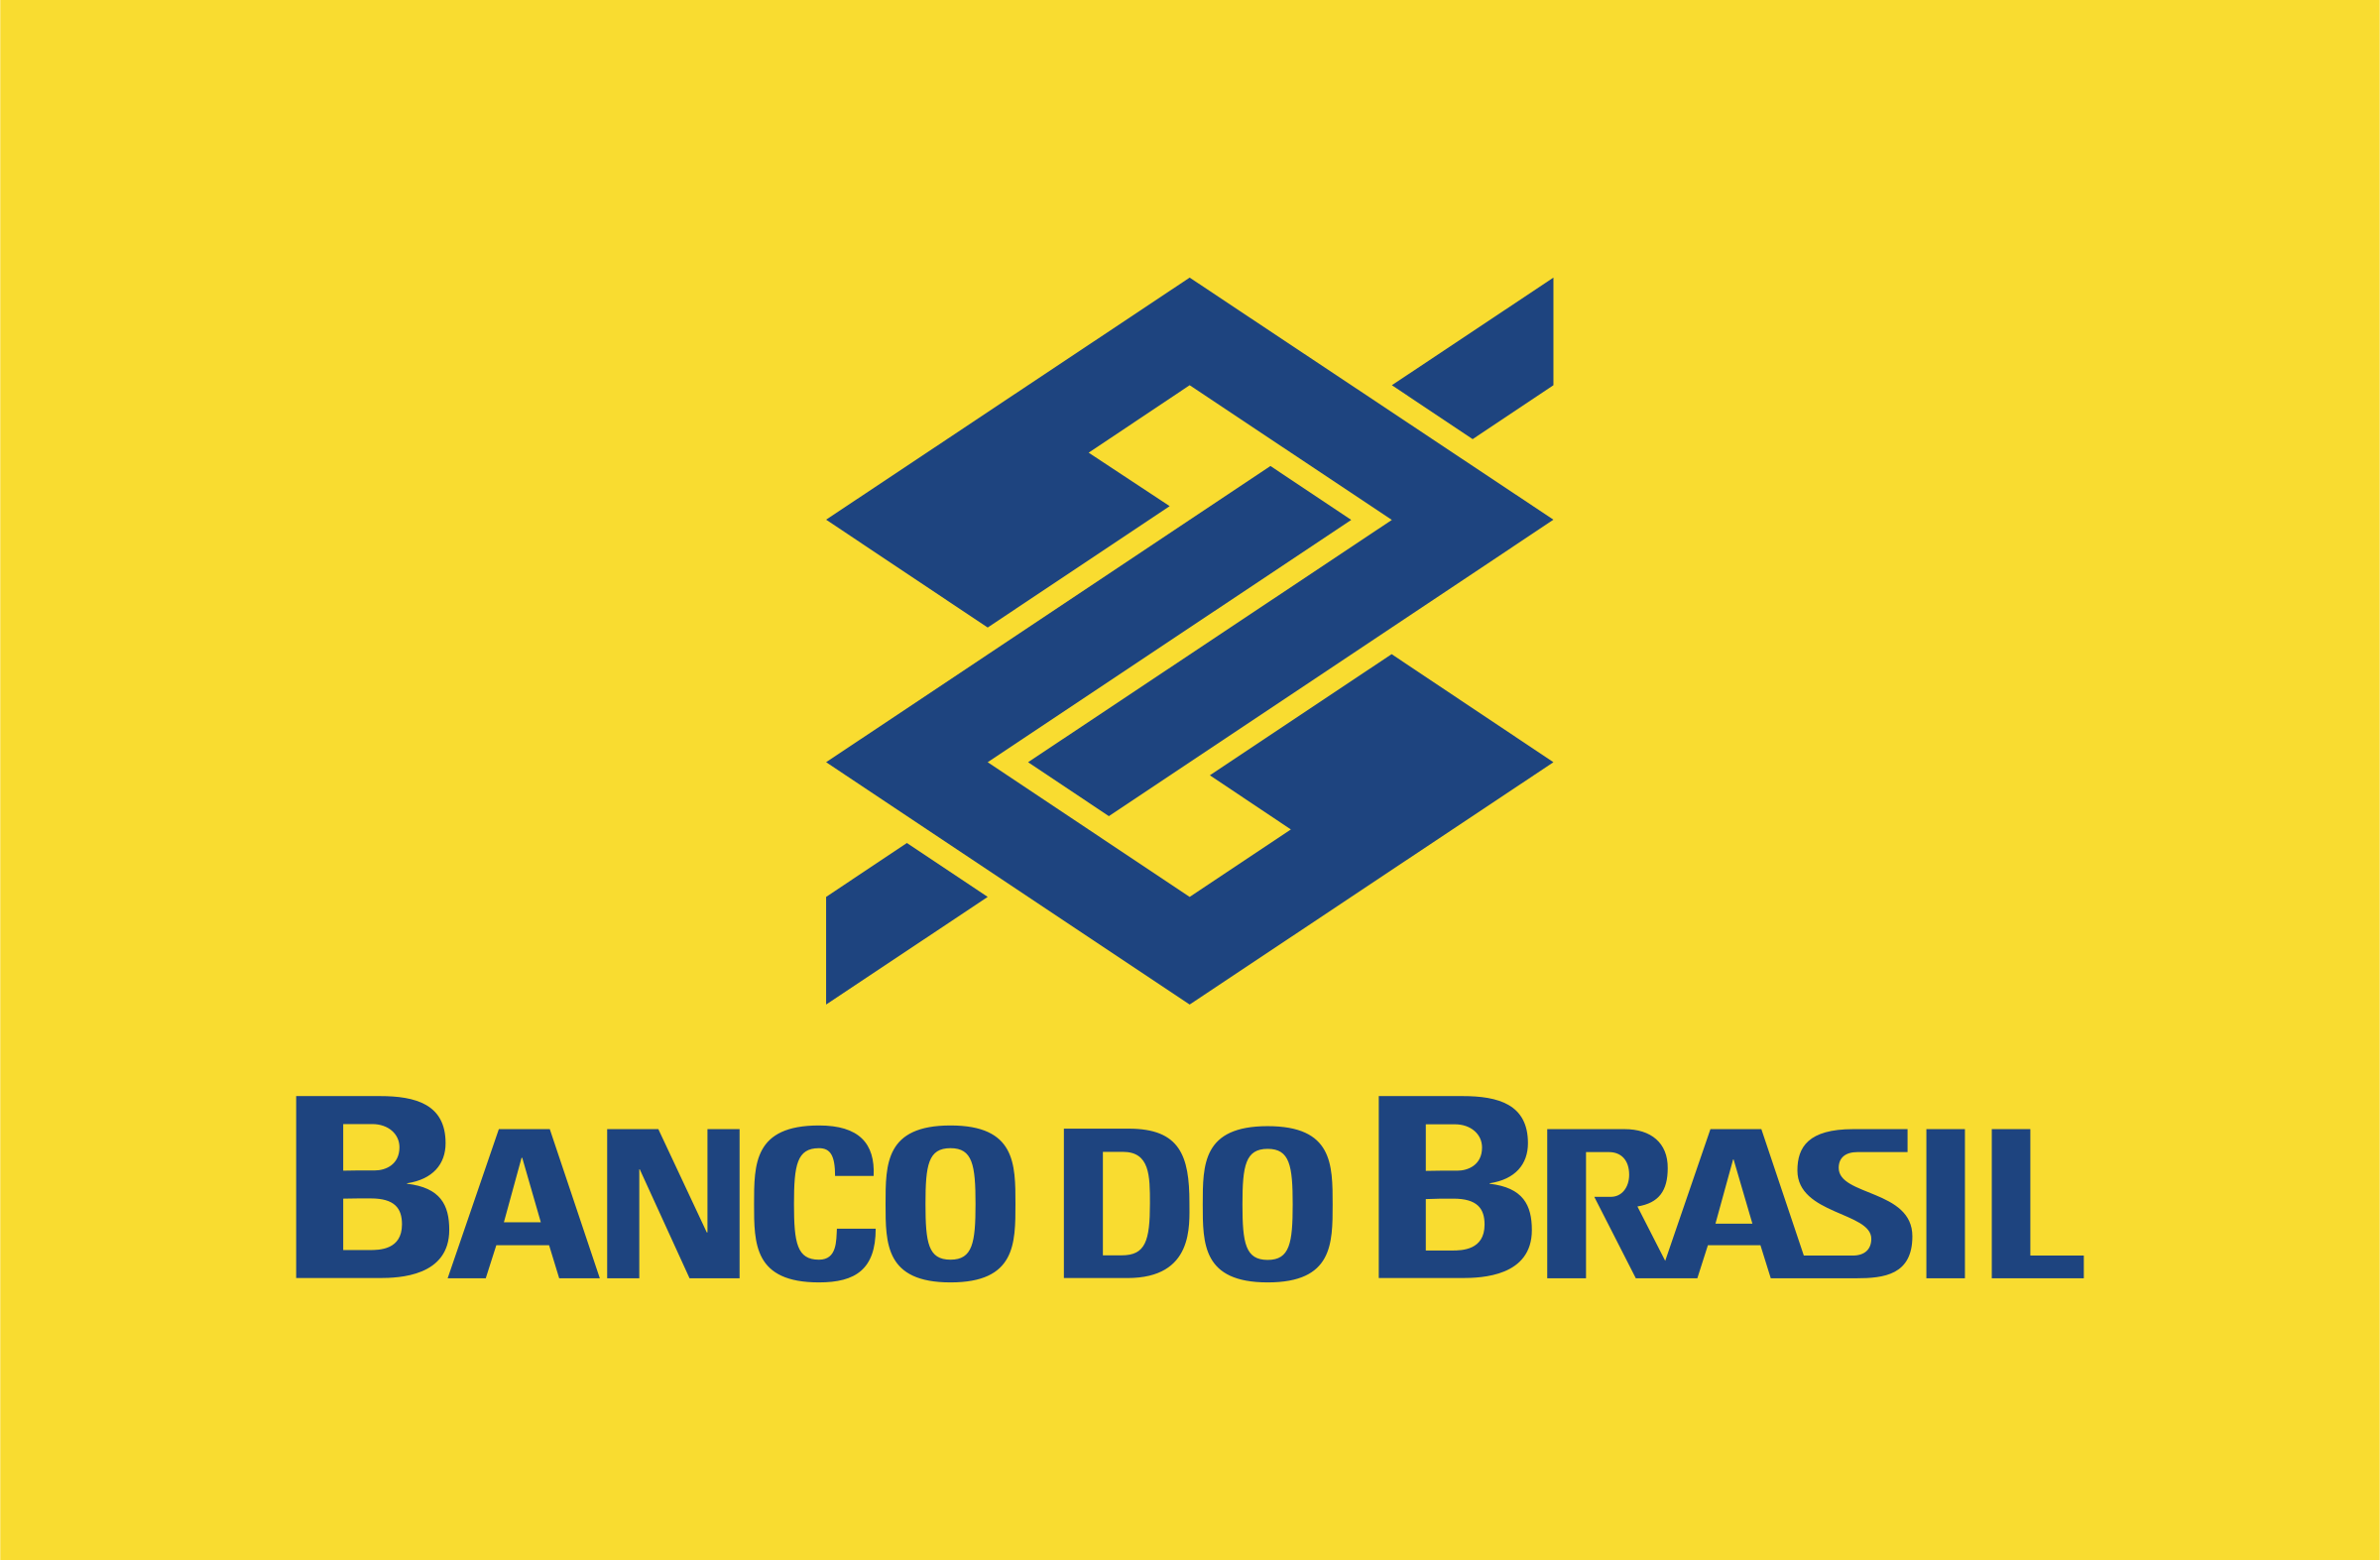 Brasil Logo - Banco do Brasil Logo PNG Transparent & SVG Vector - Freebie Supply